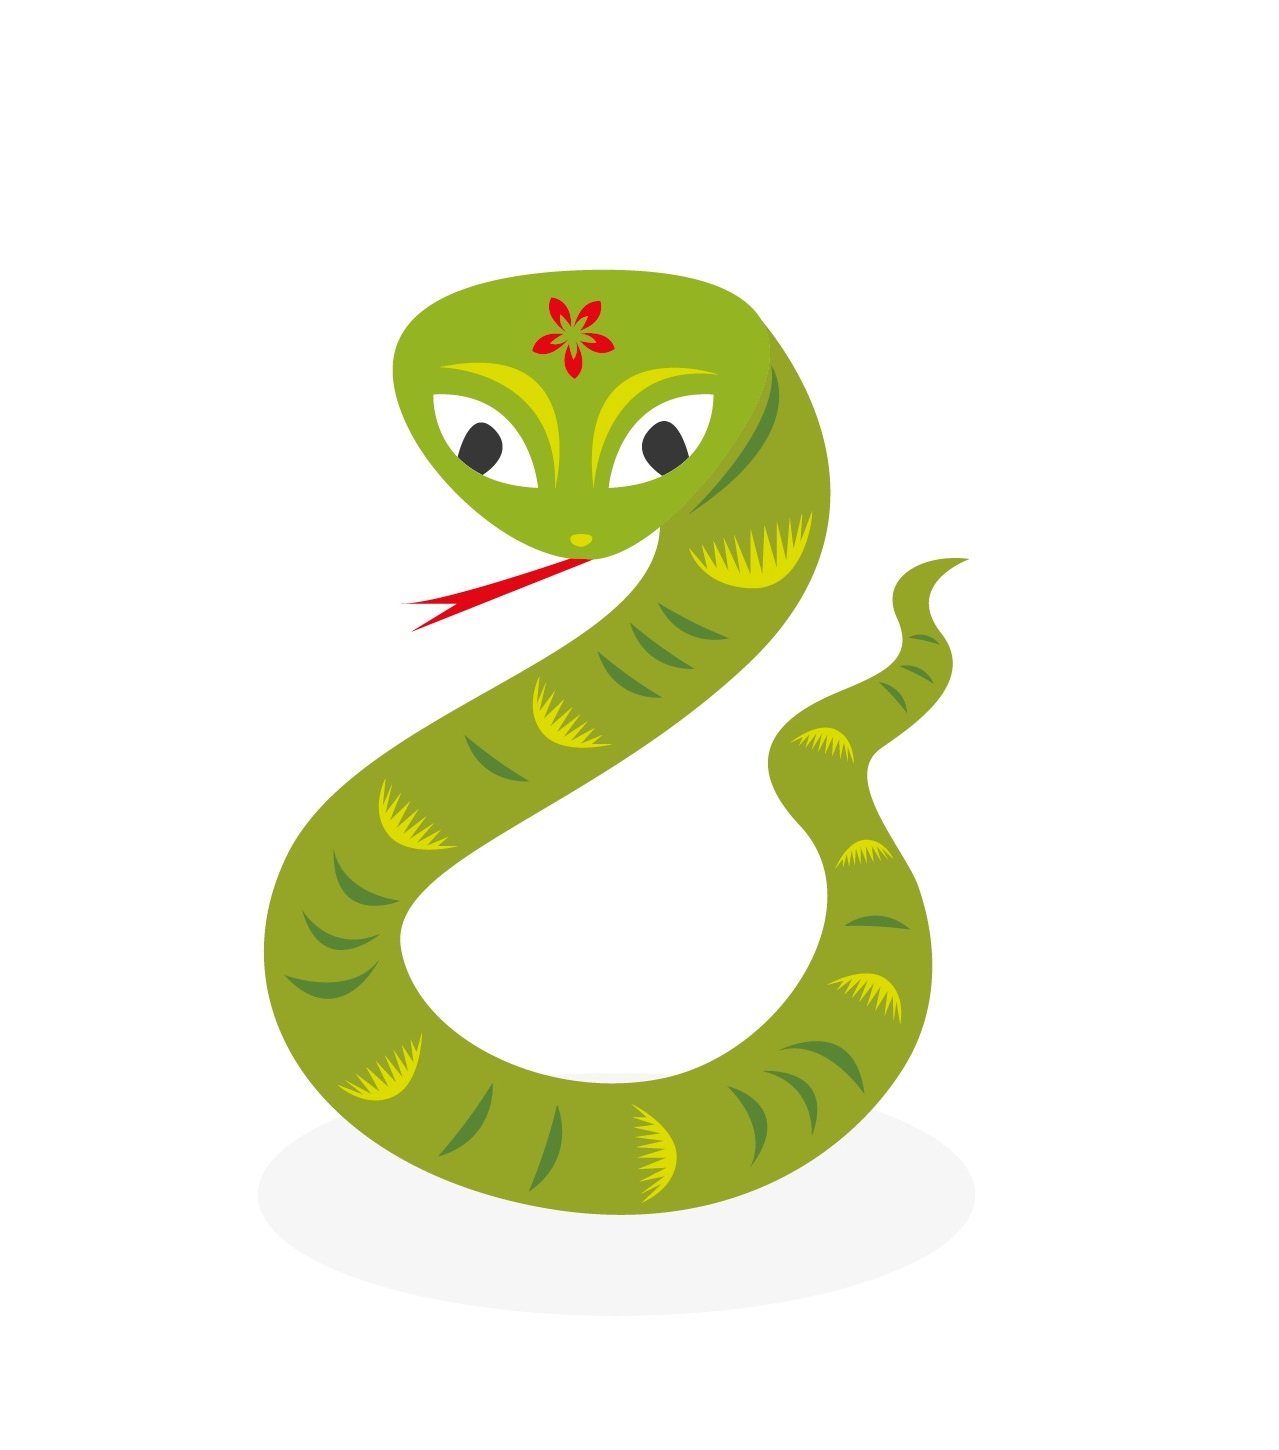 Змея зодиака. Знак зодиака змея. Знак года змеи. Змей знак зодиака. Символ года змея.